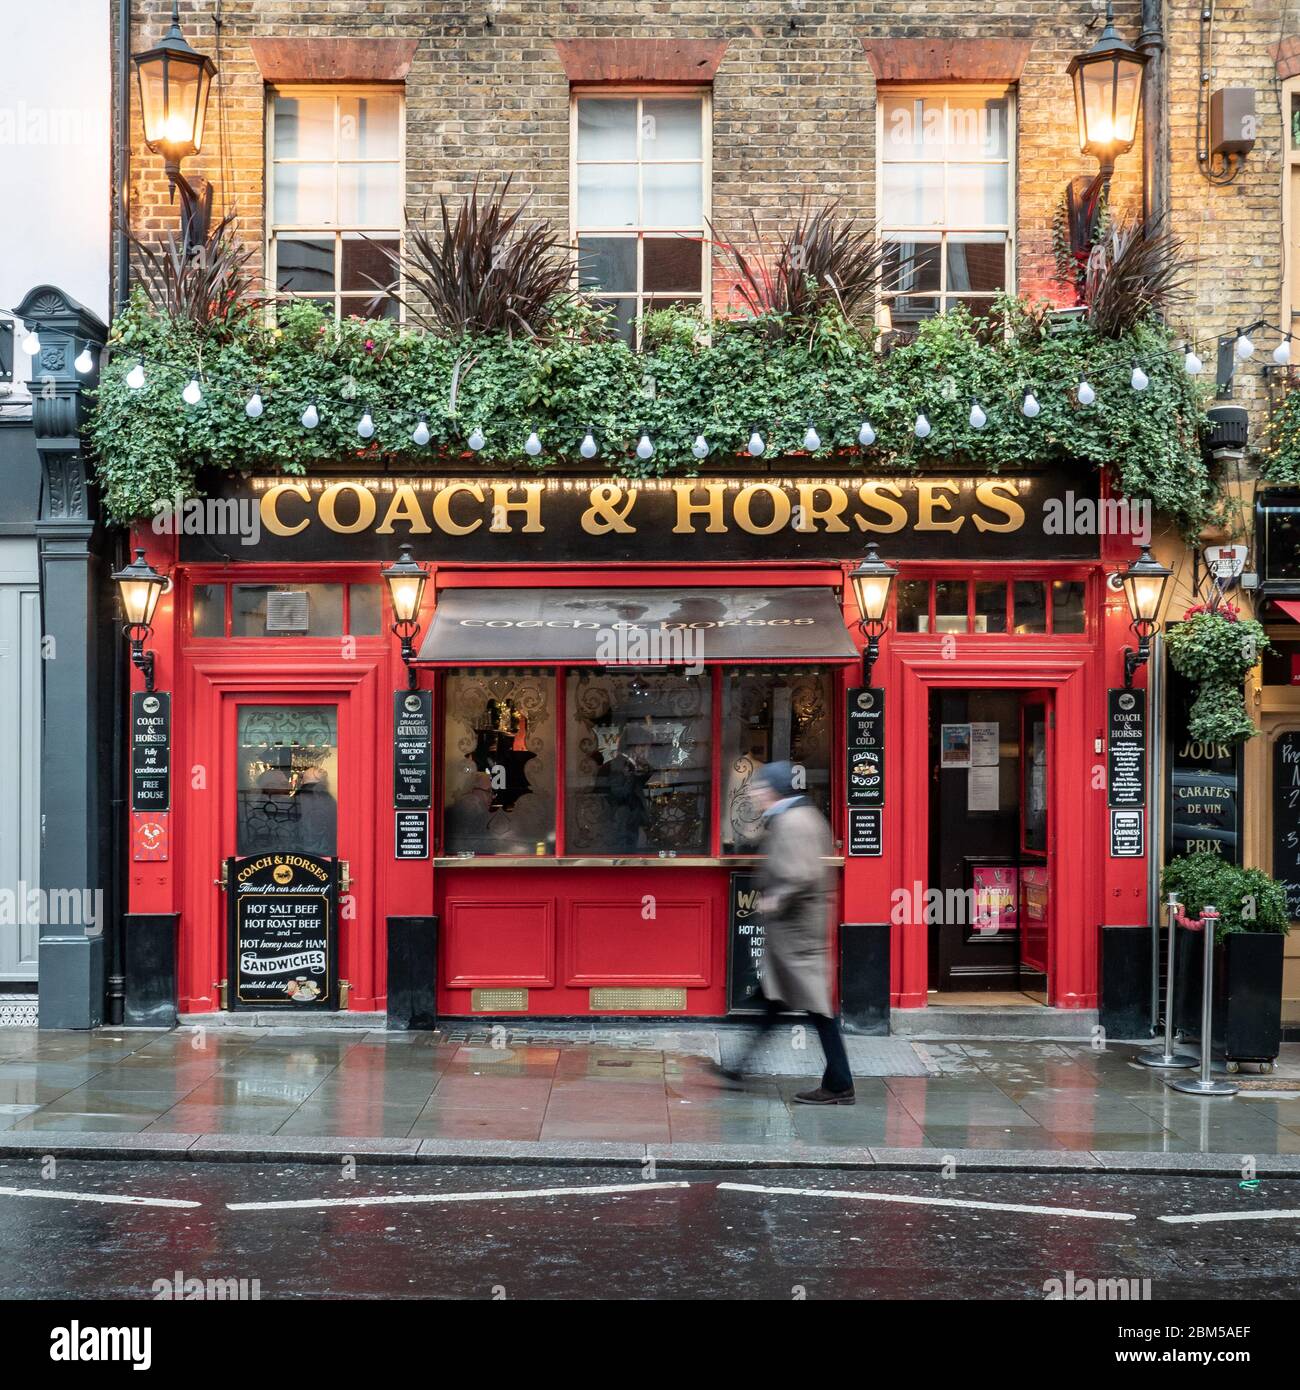 The Coach and Horses, pub traditionnel dans les rues de Covent Garden, Londres, Angleterre. Banque D'Images